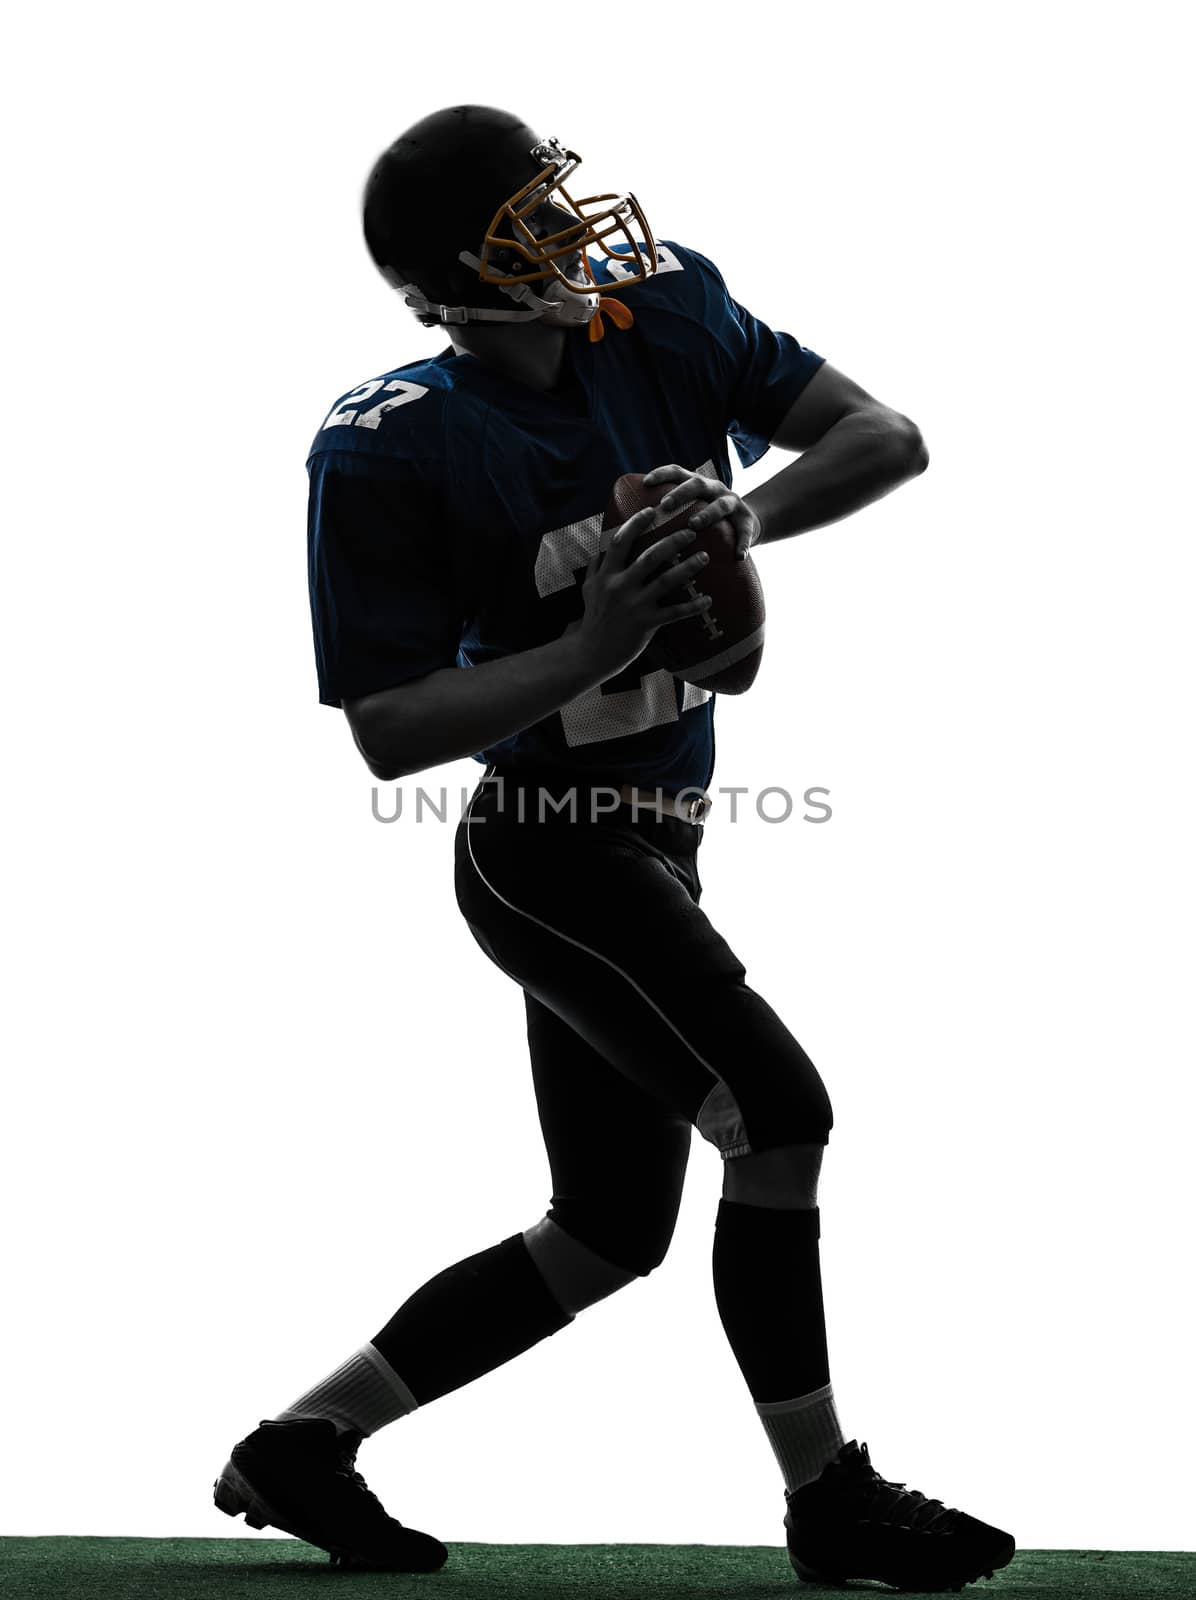 quarterback american throwing football player man silhouette by PIXSTILL